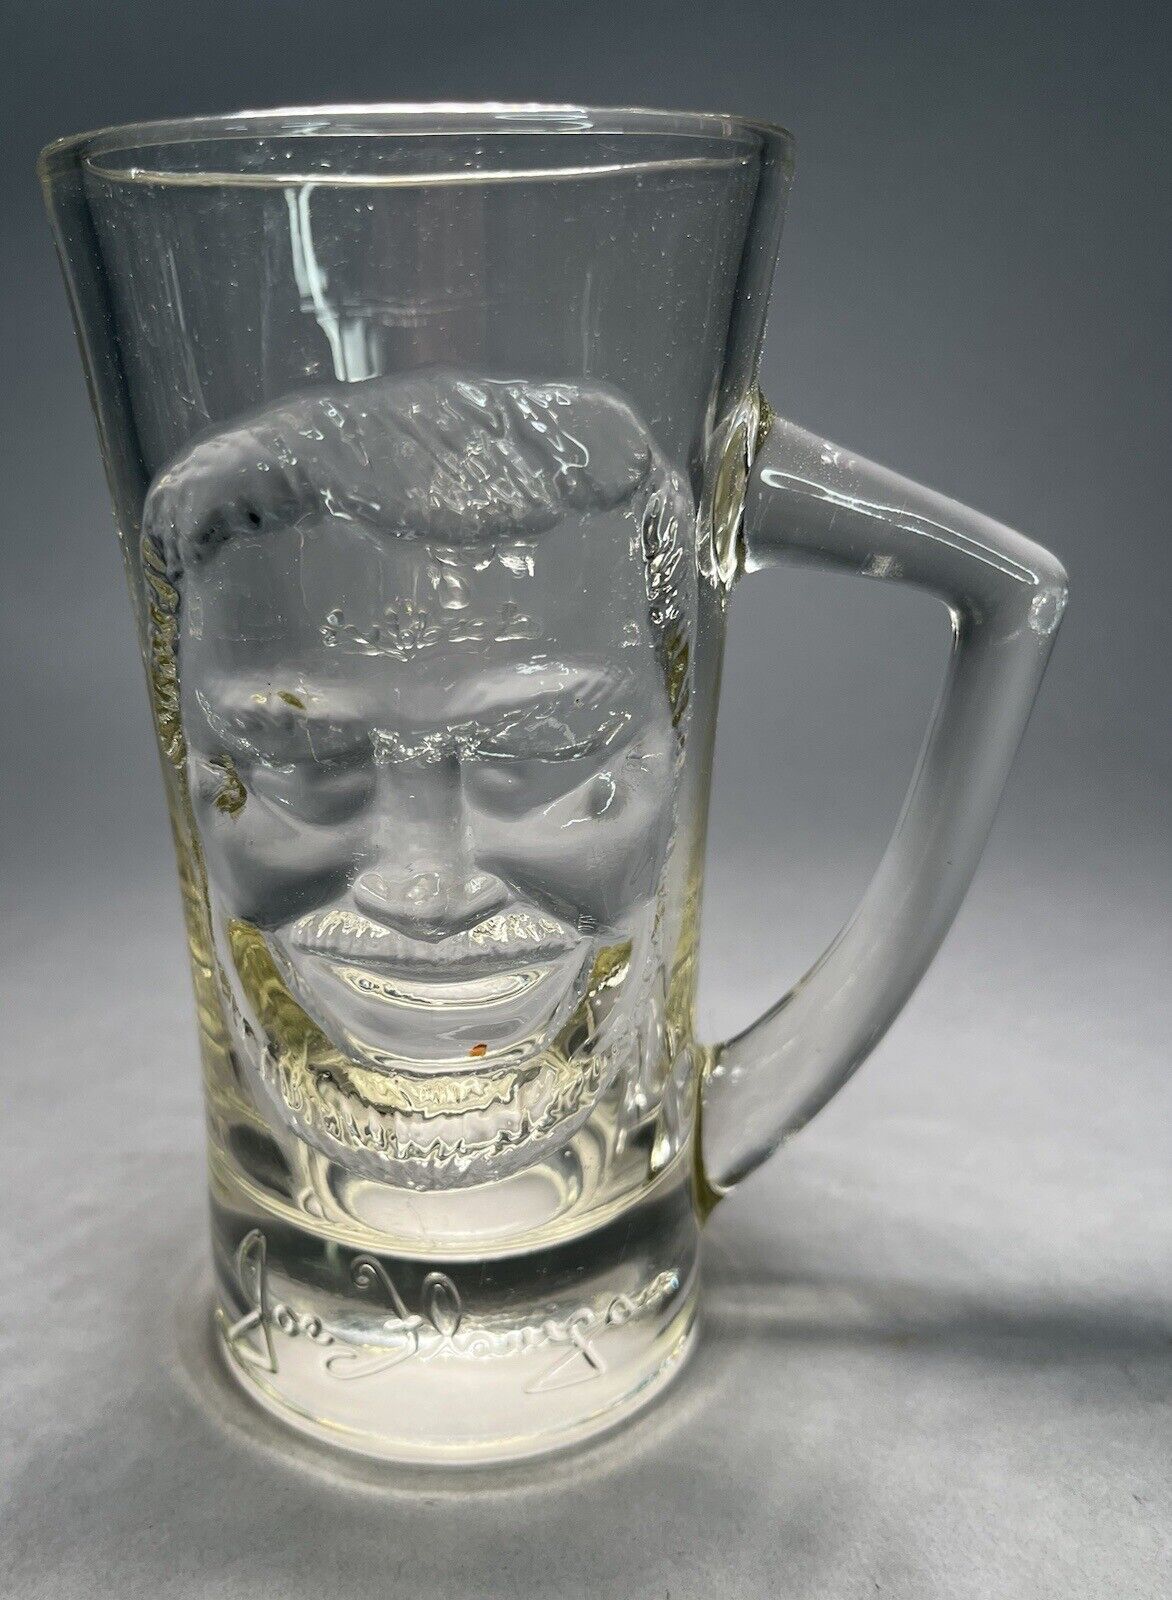 Vintage Big Daddy’s Joe Flanigan's Glass Embossed Handled Beer Mug 1970's